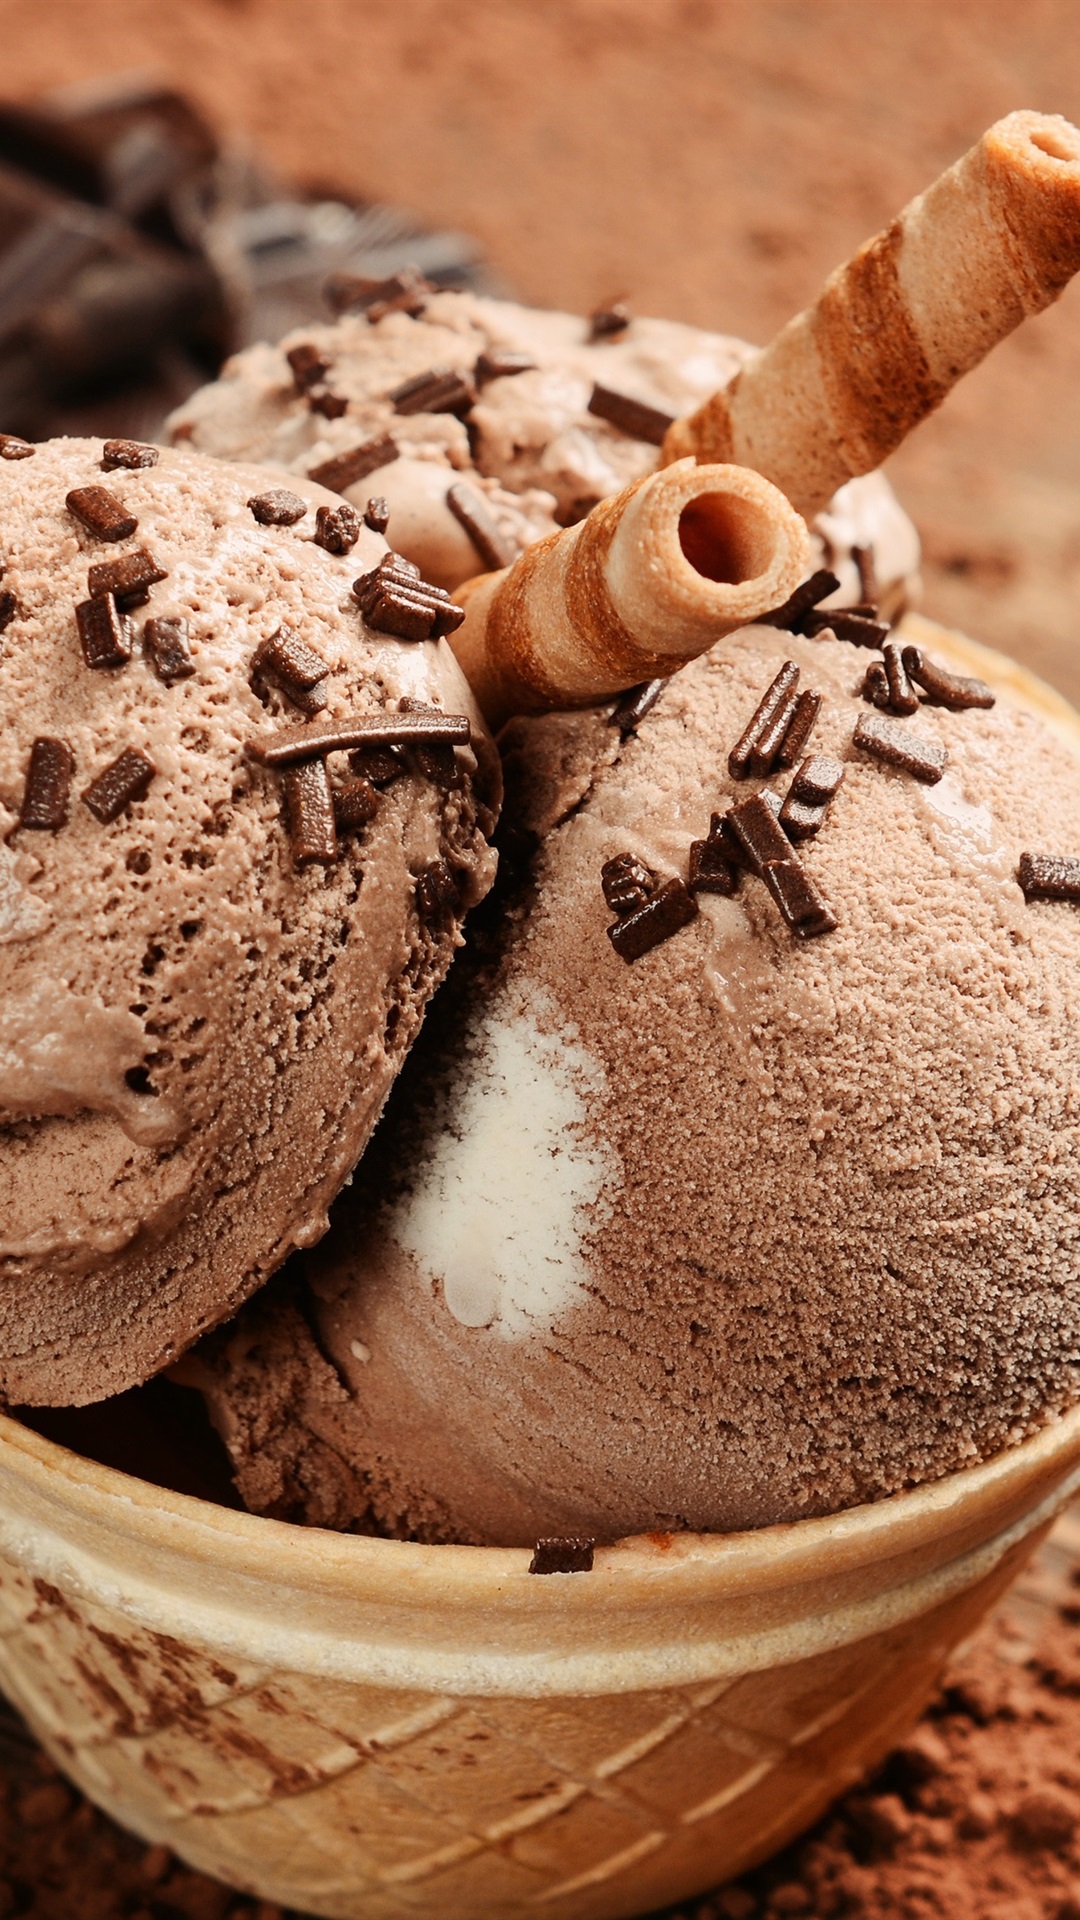 Chocolate Ice Cream, Summer Dessert 1080x1920 IPhone 8 7 6 6S Plus Wallpaper, Background, Picture, Image